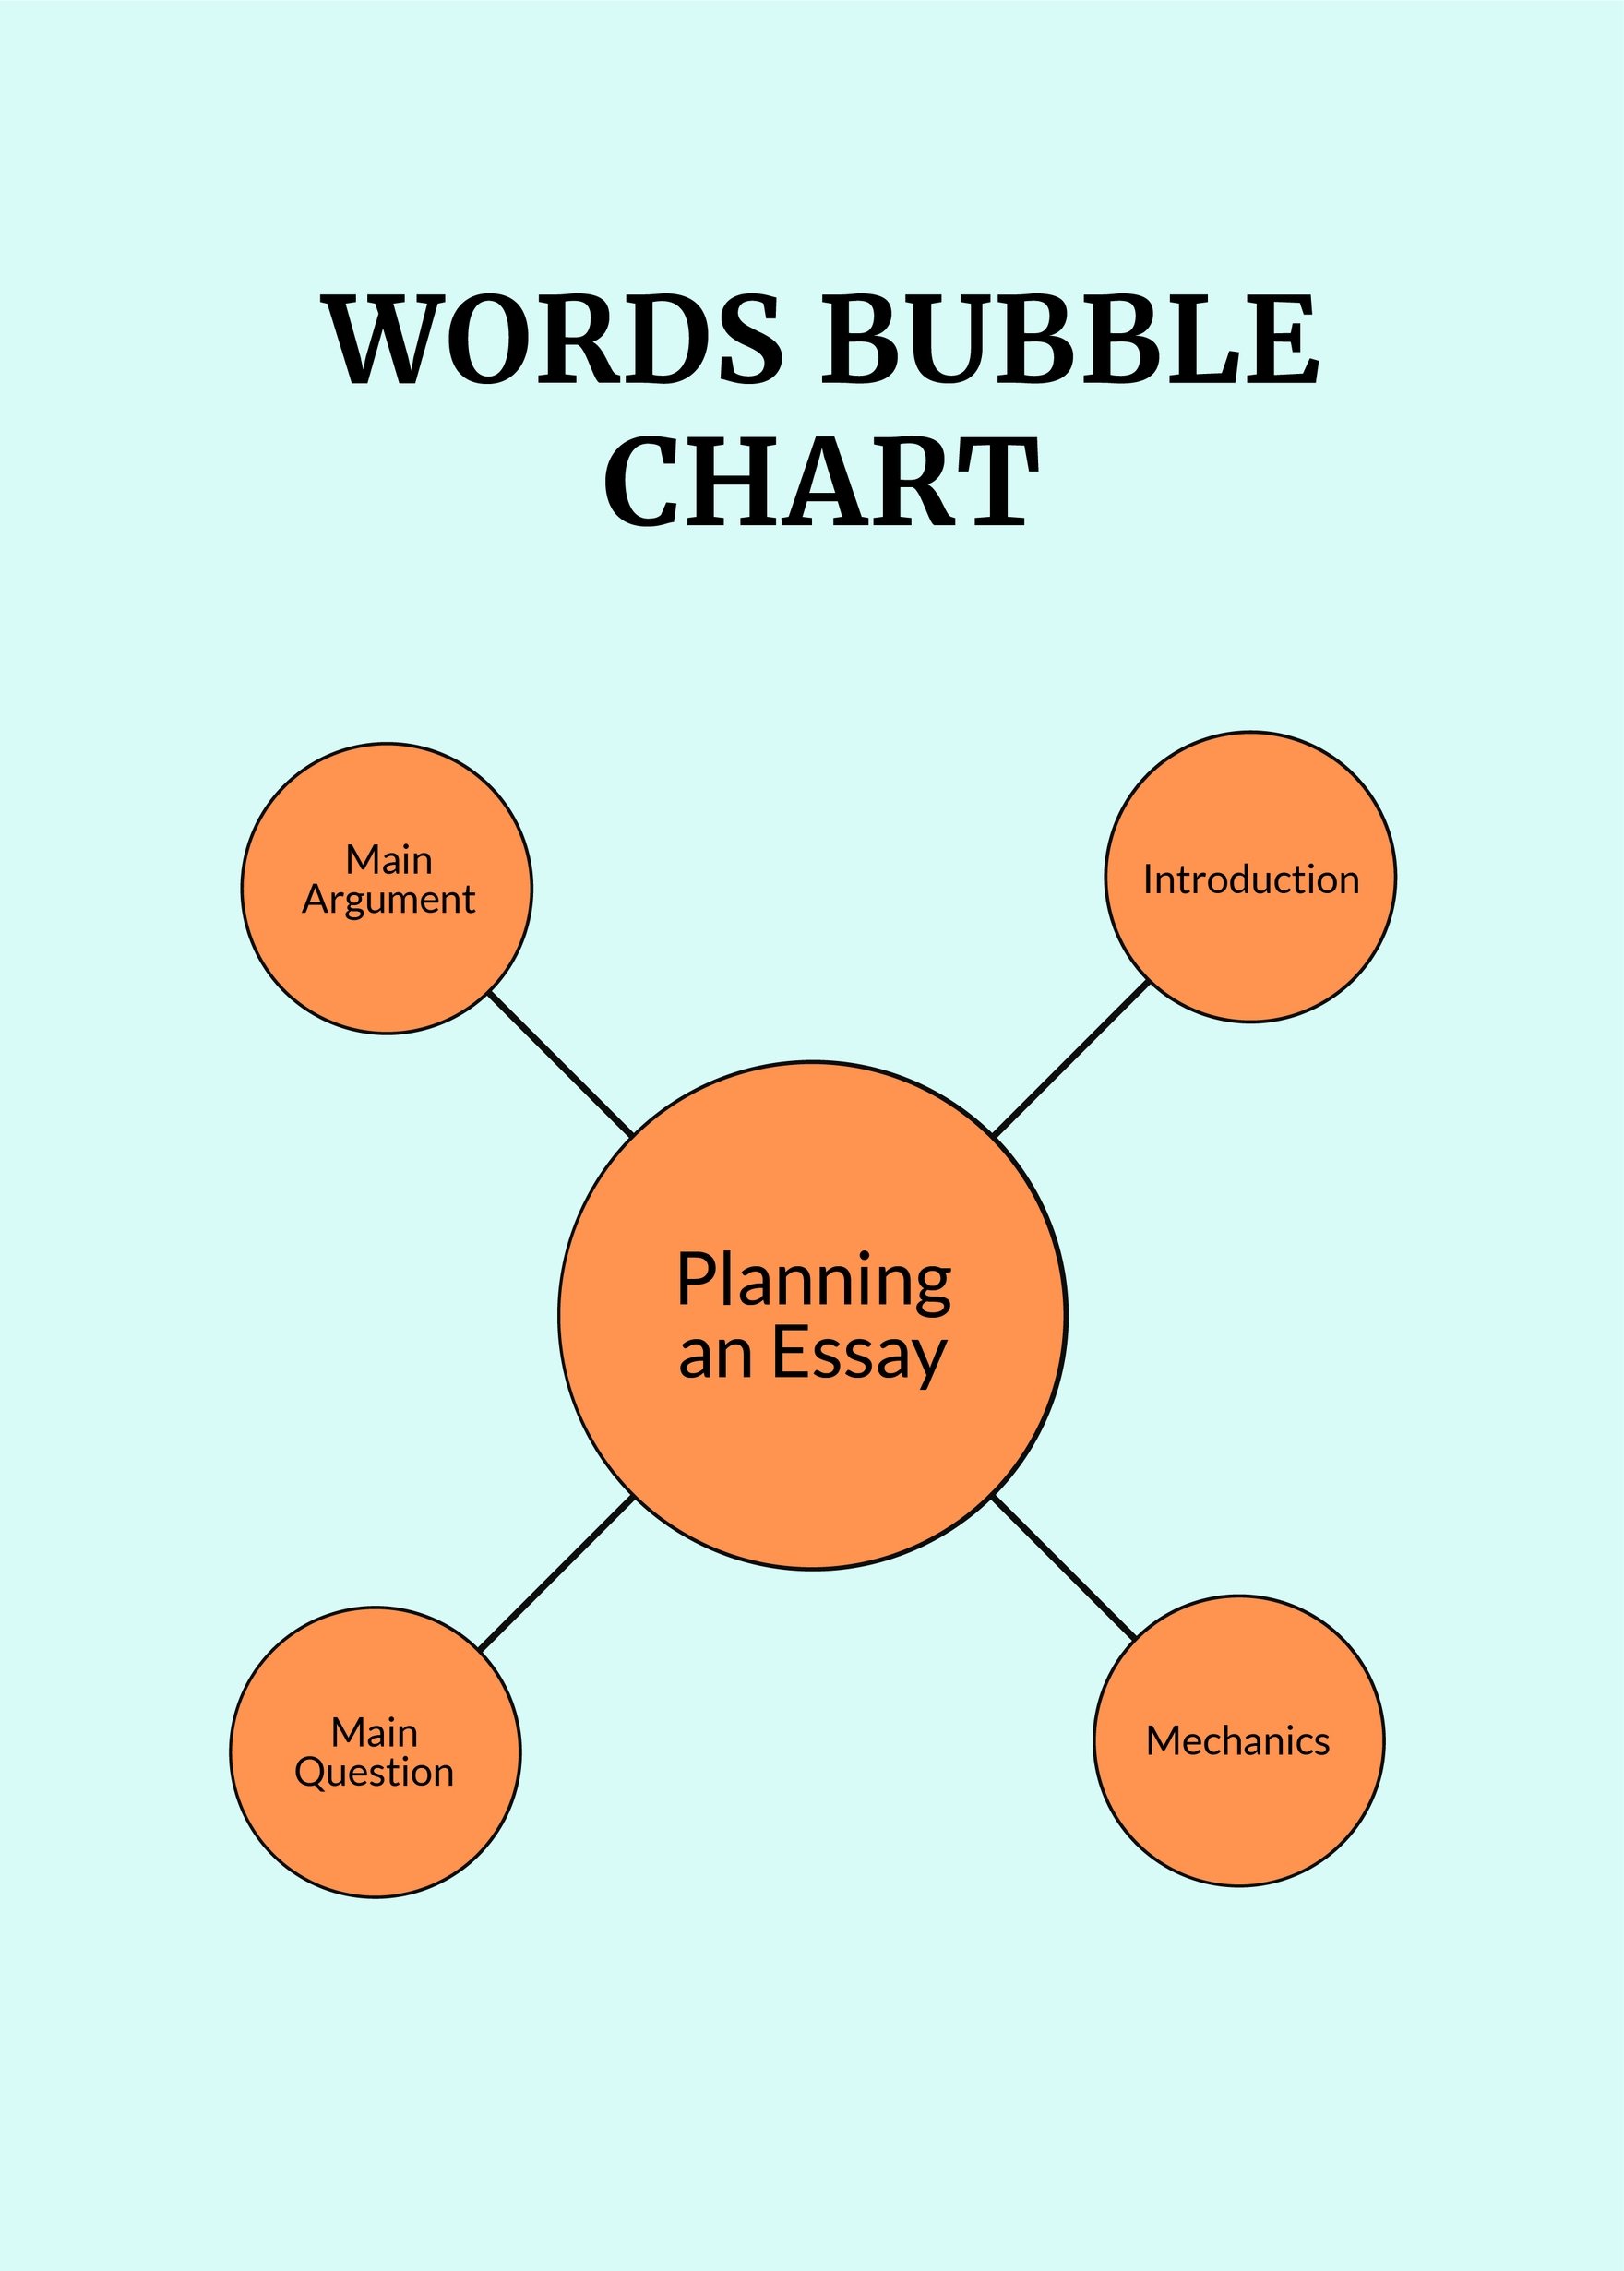 Free Words Bubble Chart in PDF, Illustrator